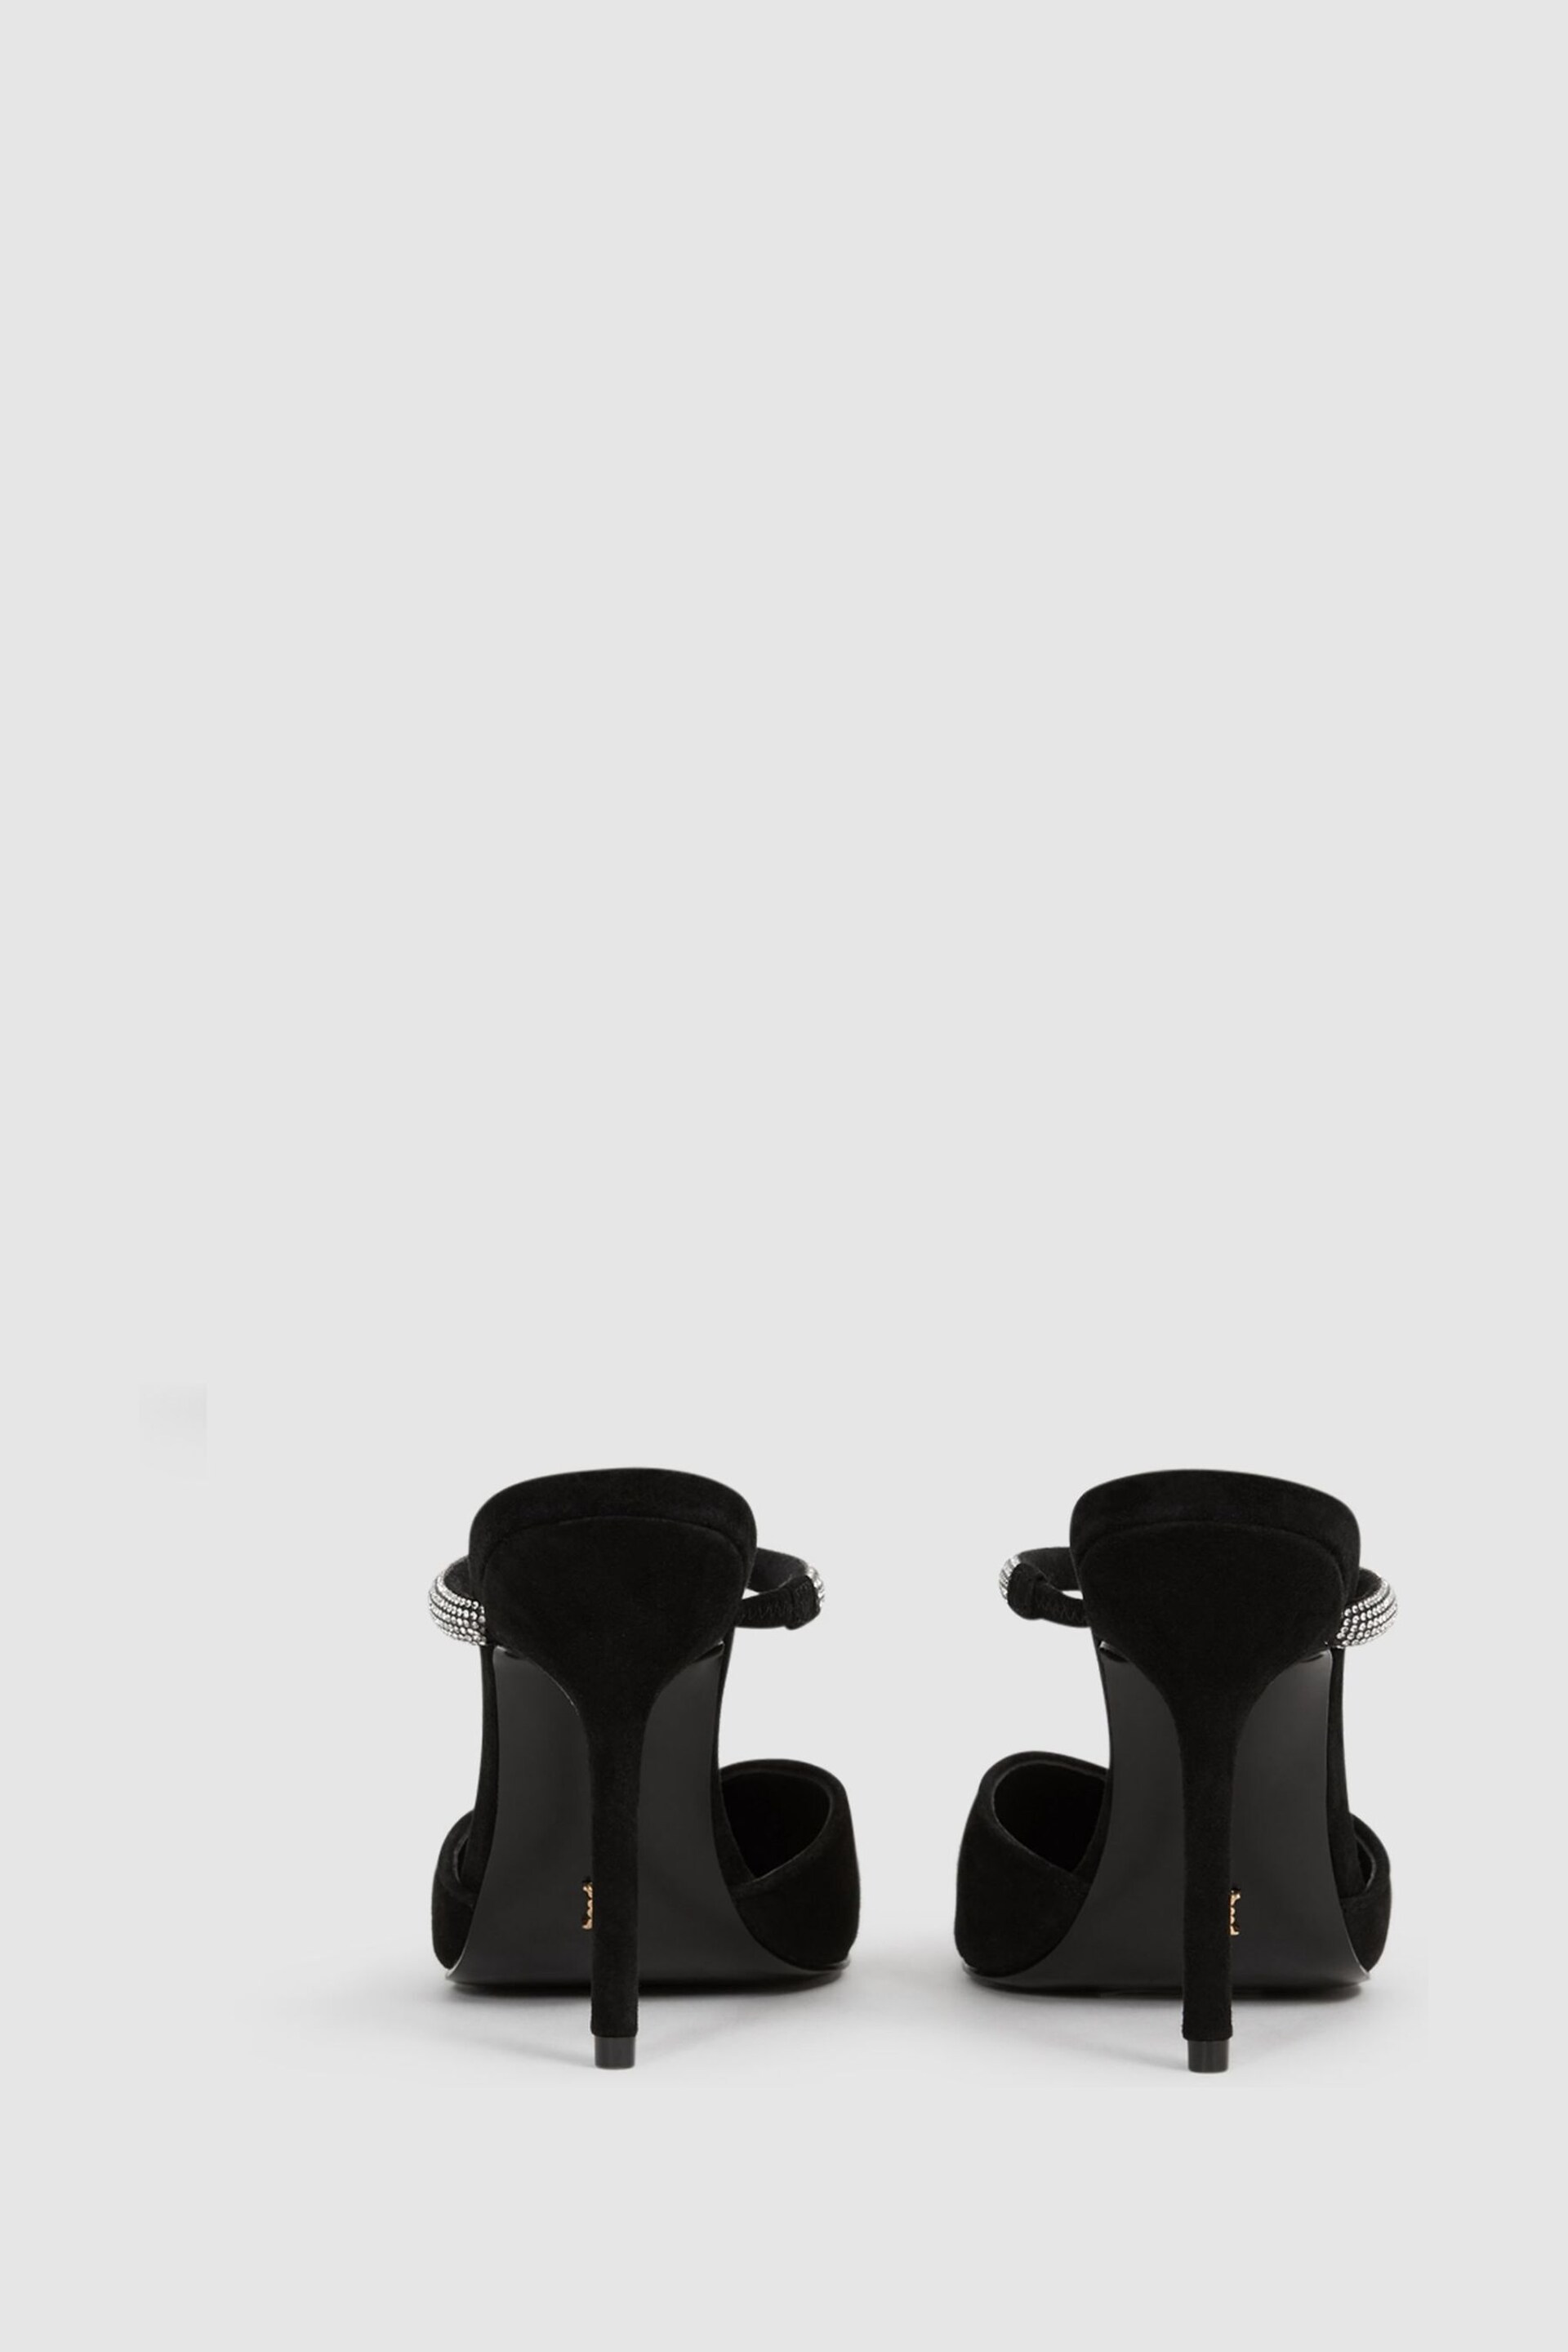 Reiss Black Banbury Embellished Crystal Court Shoes - Image 6 of 6